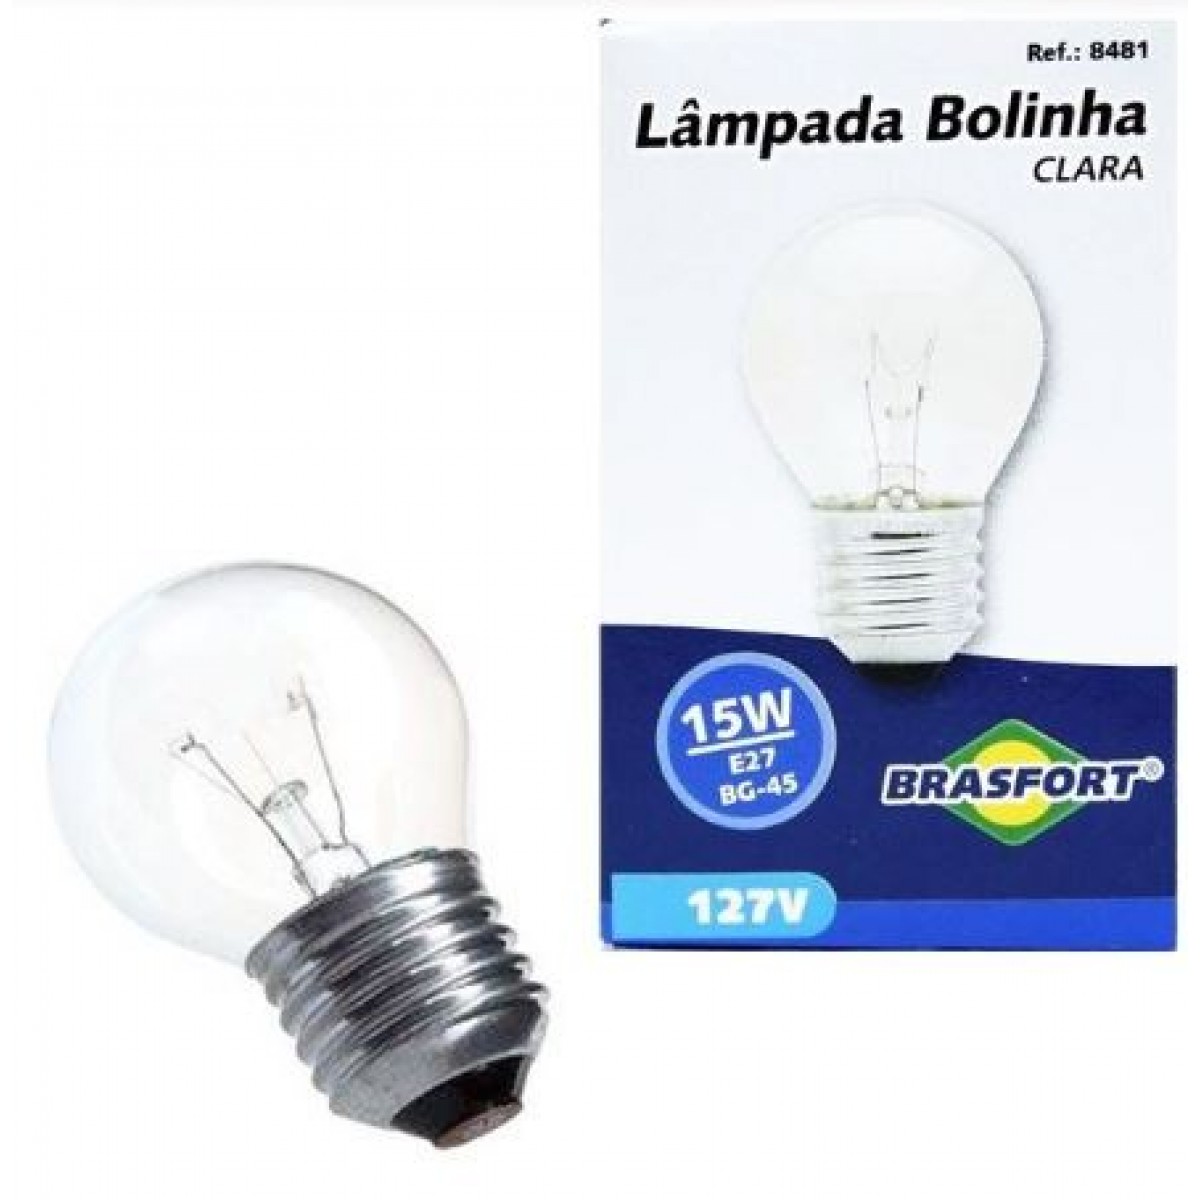 LAMPADA BOLA CLARA 15W 127V